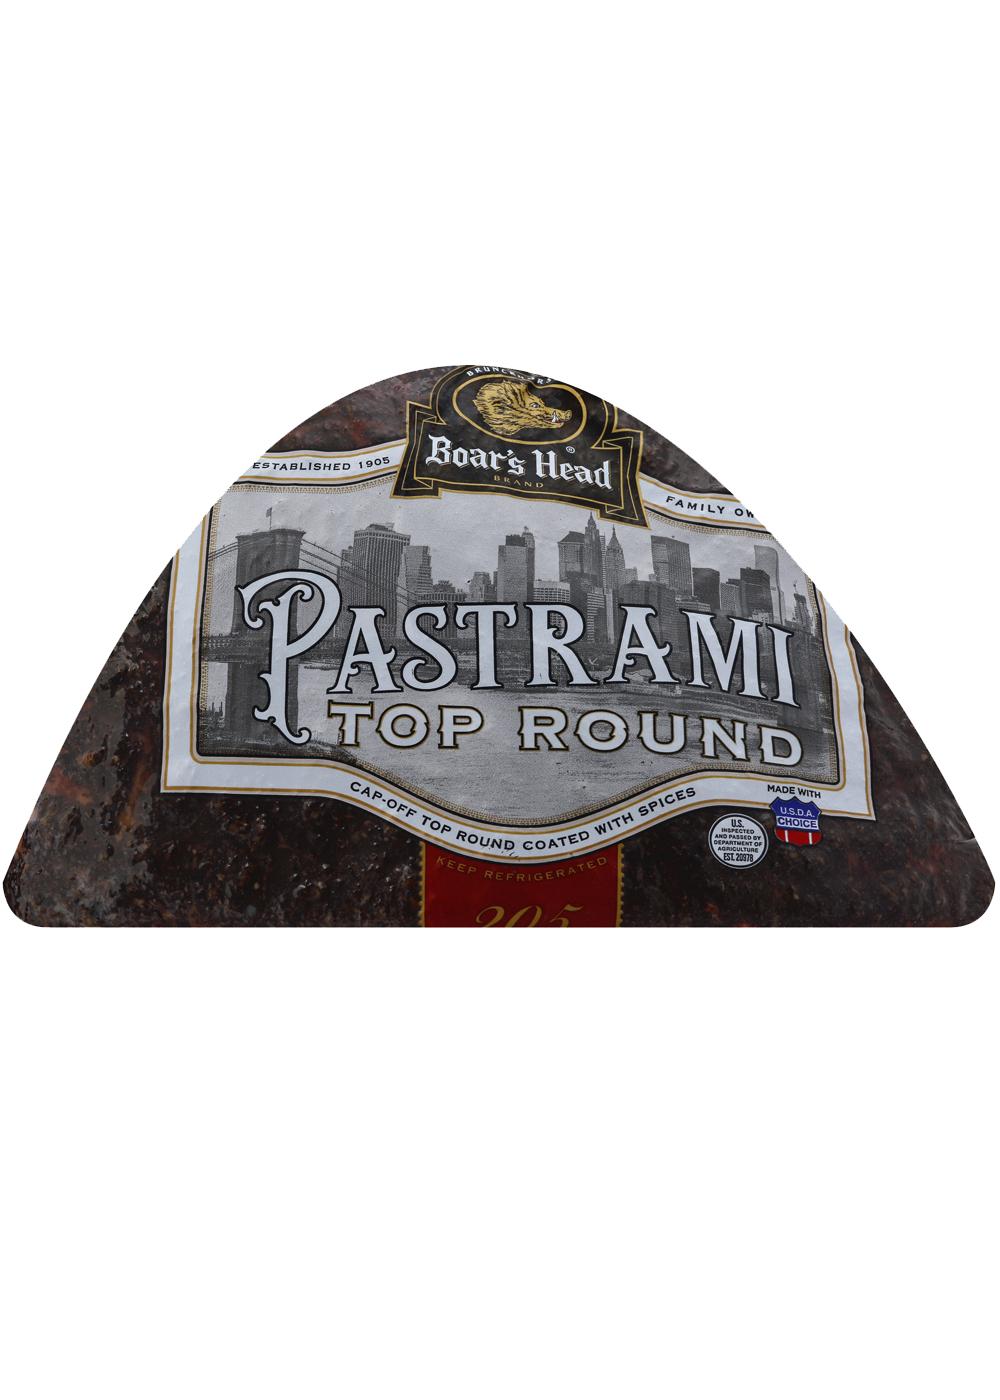 Boar's Head Top Round Pastrami, Custom Sliced; image 1 of 2